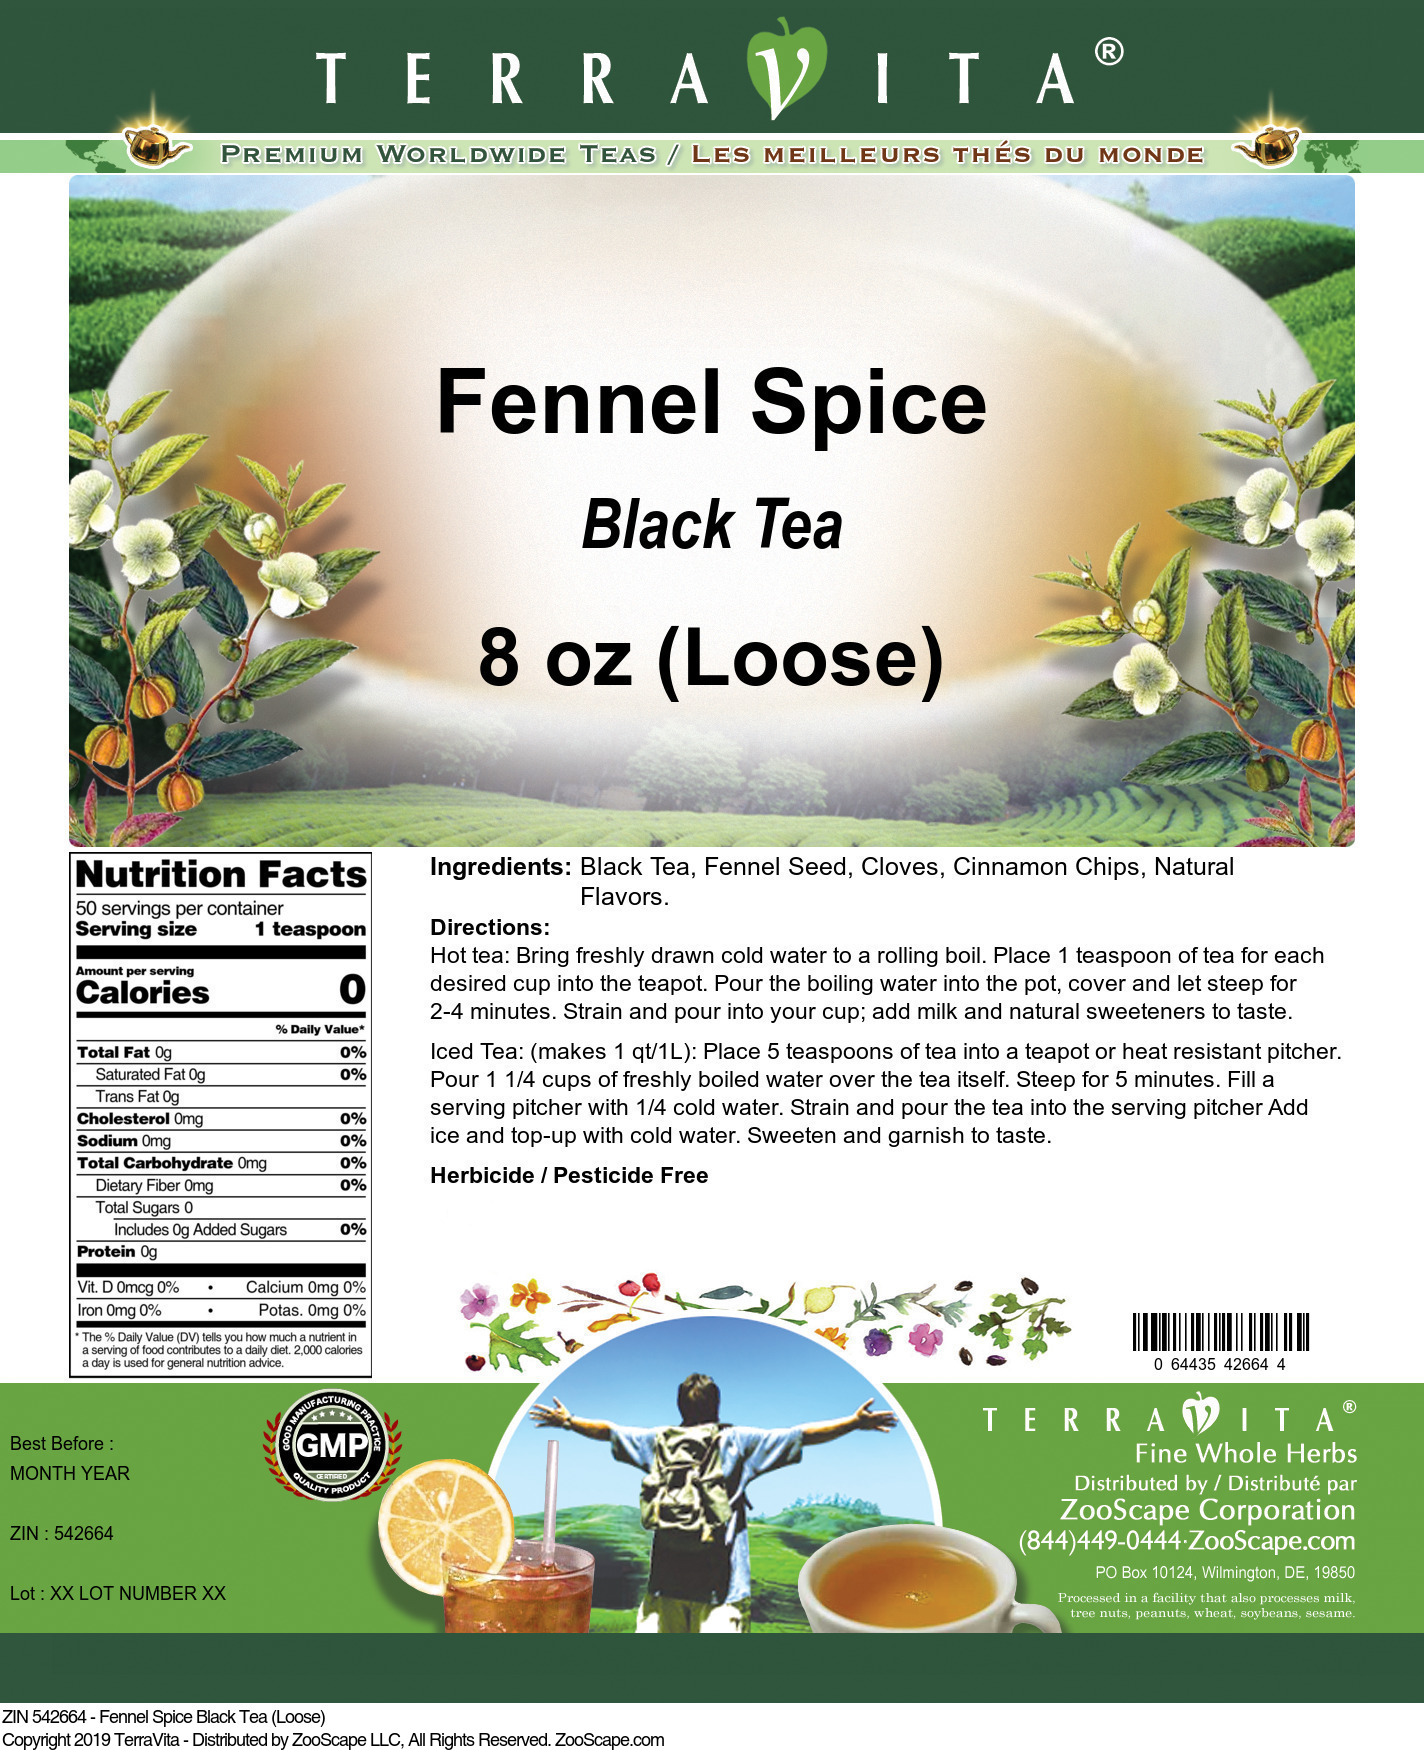 Fennel Spice Black Tea (Loose) - Label